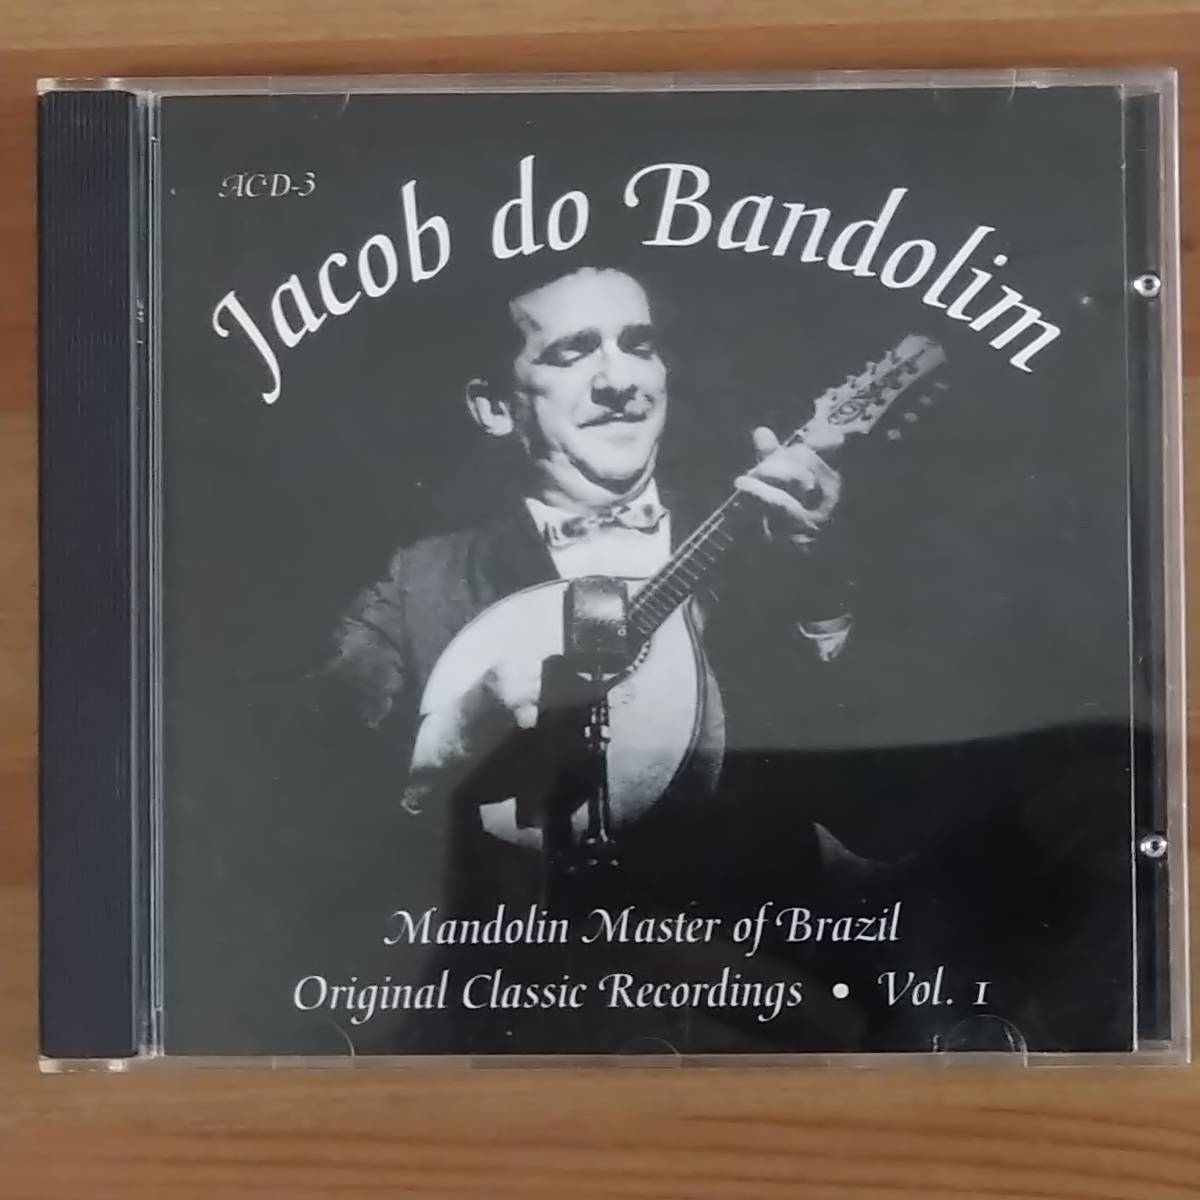 *Jacob do Bandolim Mandolin Master of Brazil Original Classic Recordings*Vol.1 ACD-3 снят с производства 